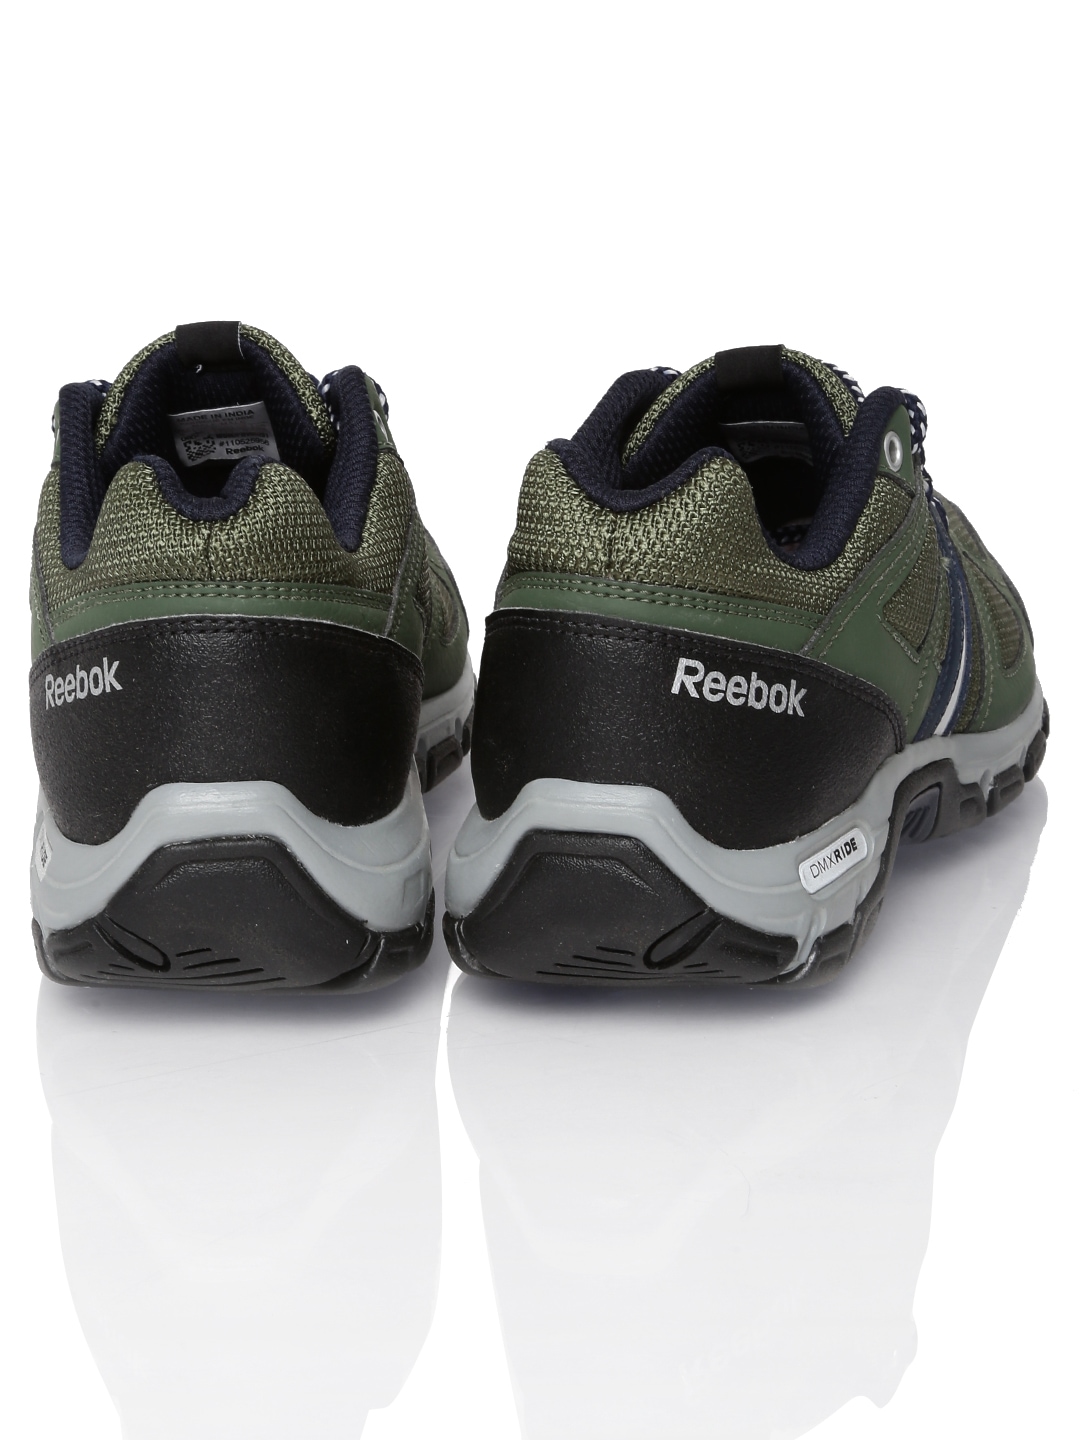 reebok adventure rider sport shoes price